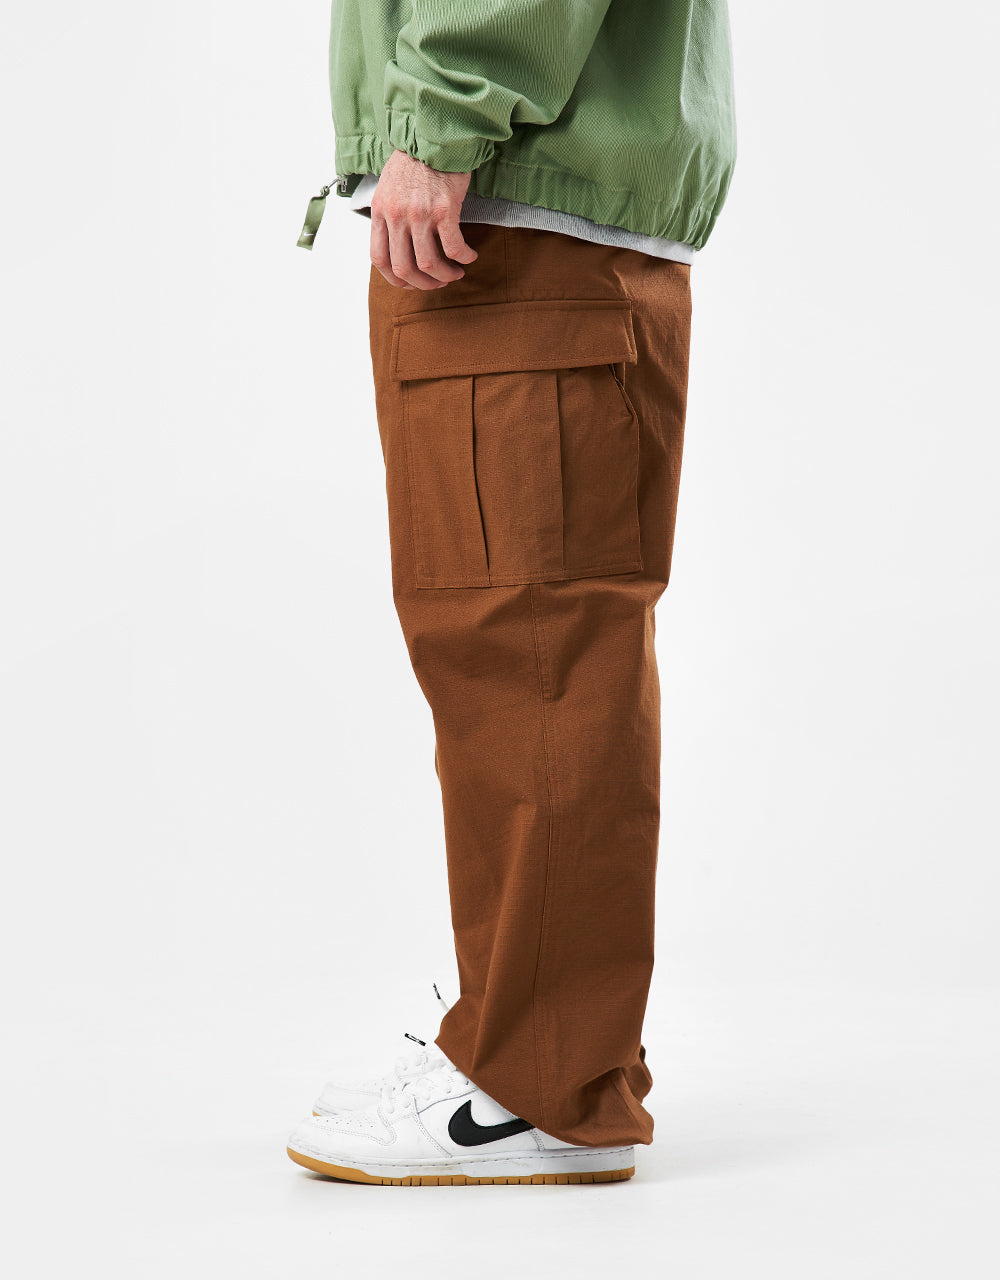 Nike SB Kearny Cargo Pant - Light British Tan